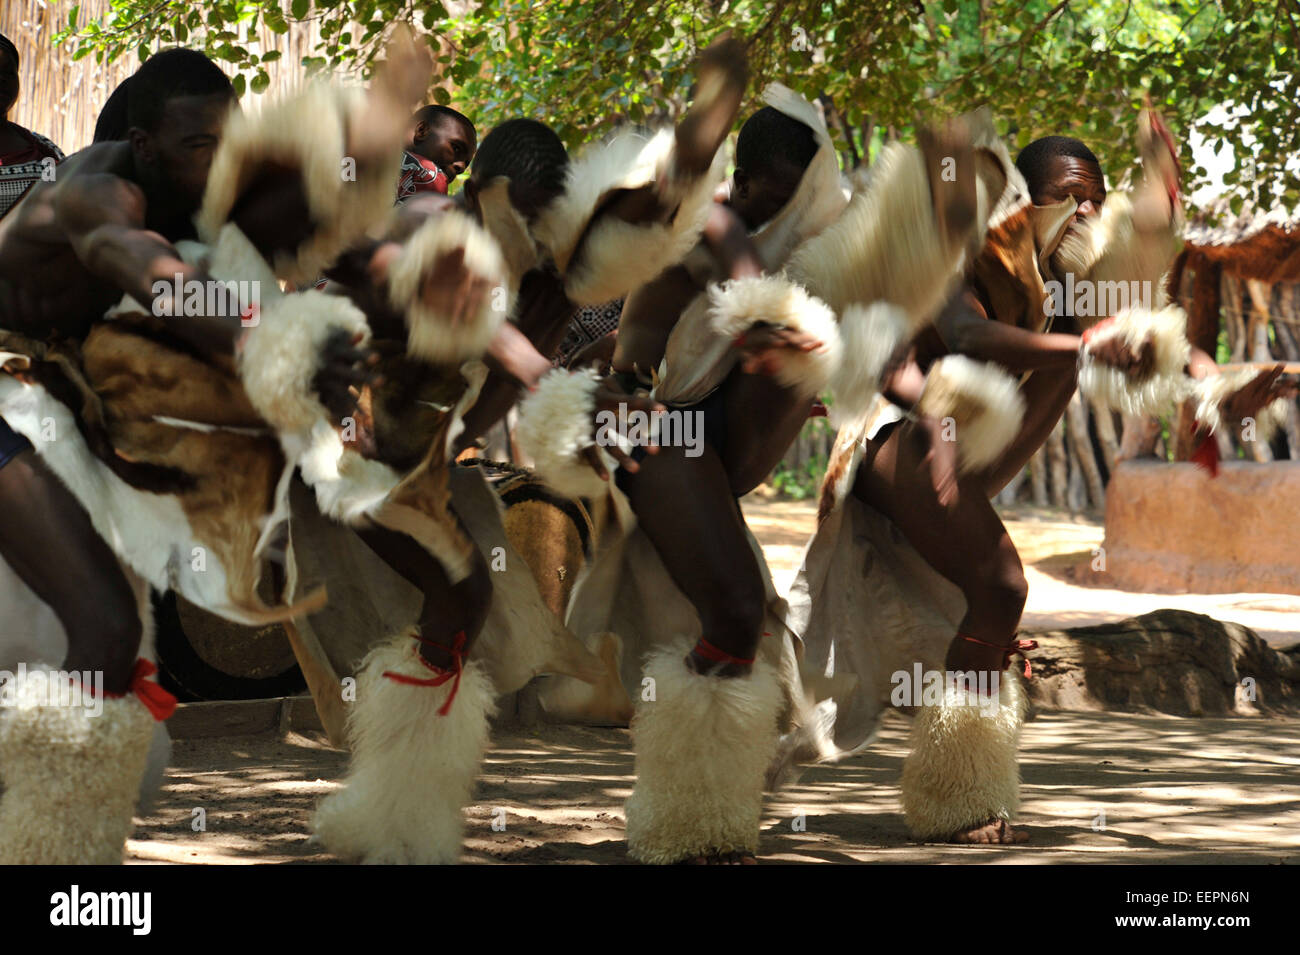 Matsamo, Swaziland, high kicking Swazi dancers perform energetic war dance at Matsamo cultural village, traditional dancing Stock Photo